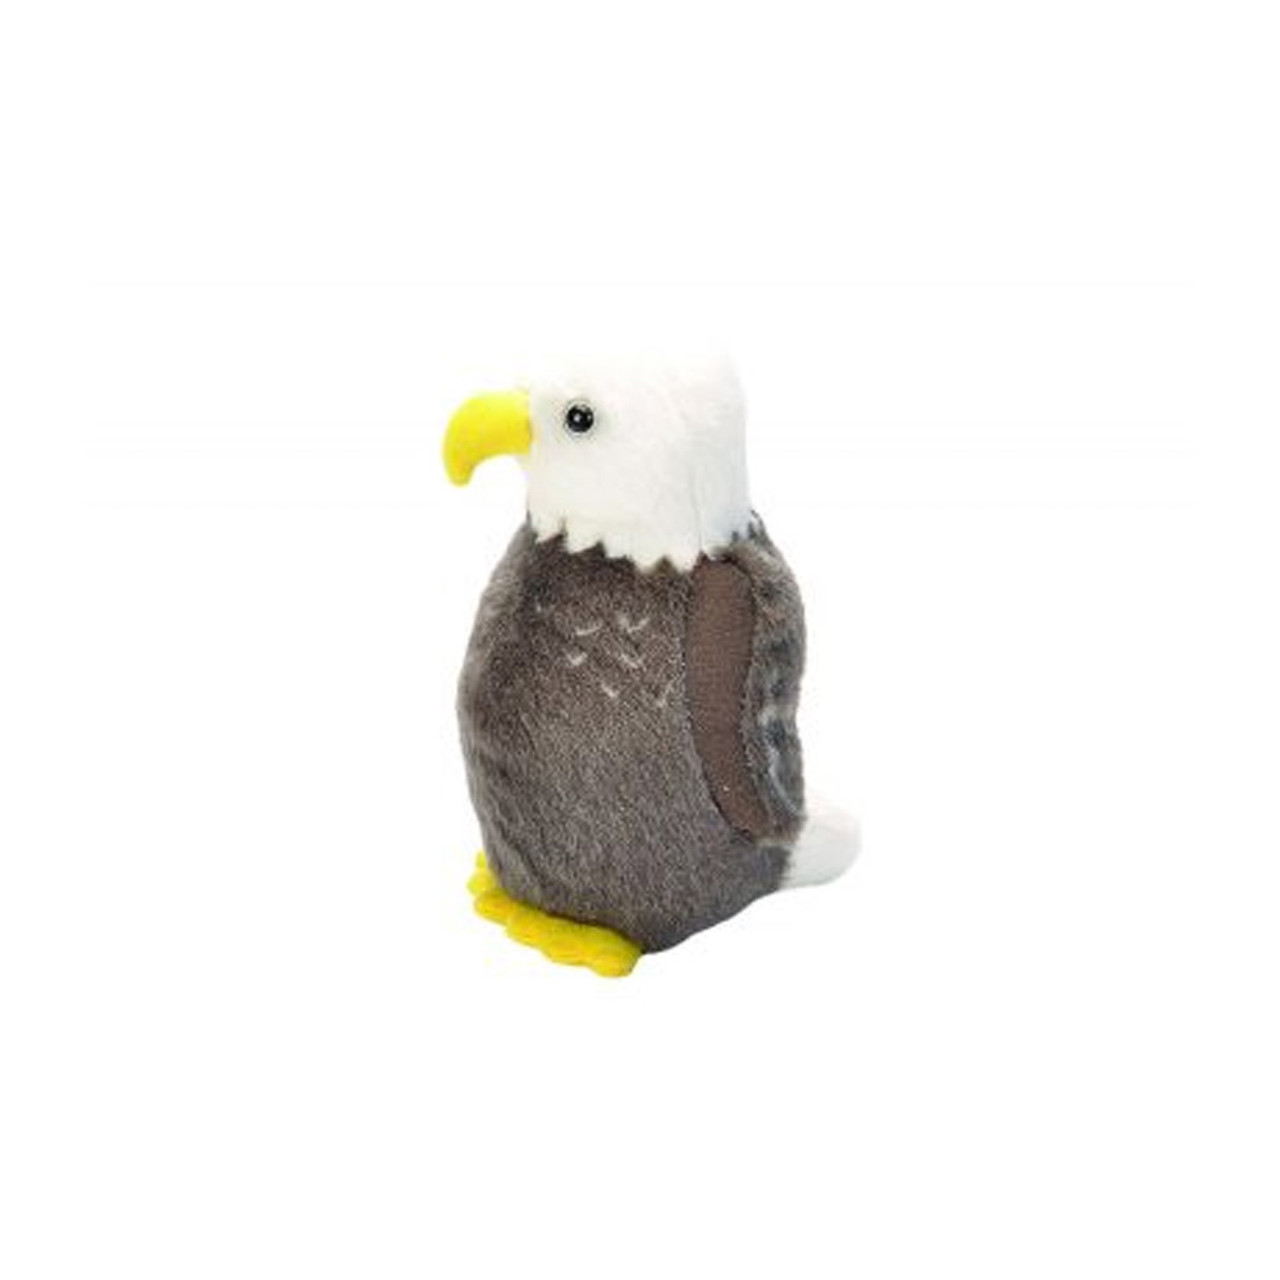 bald eagle stuffed animal